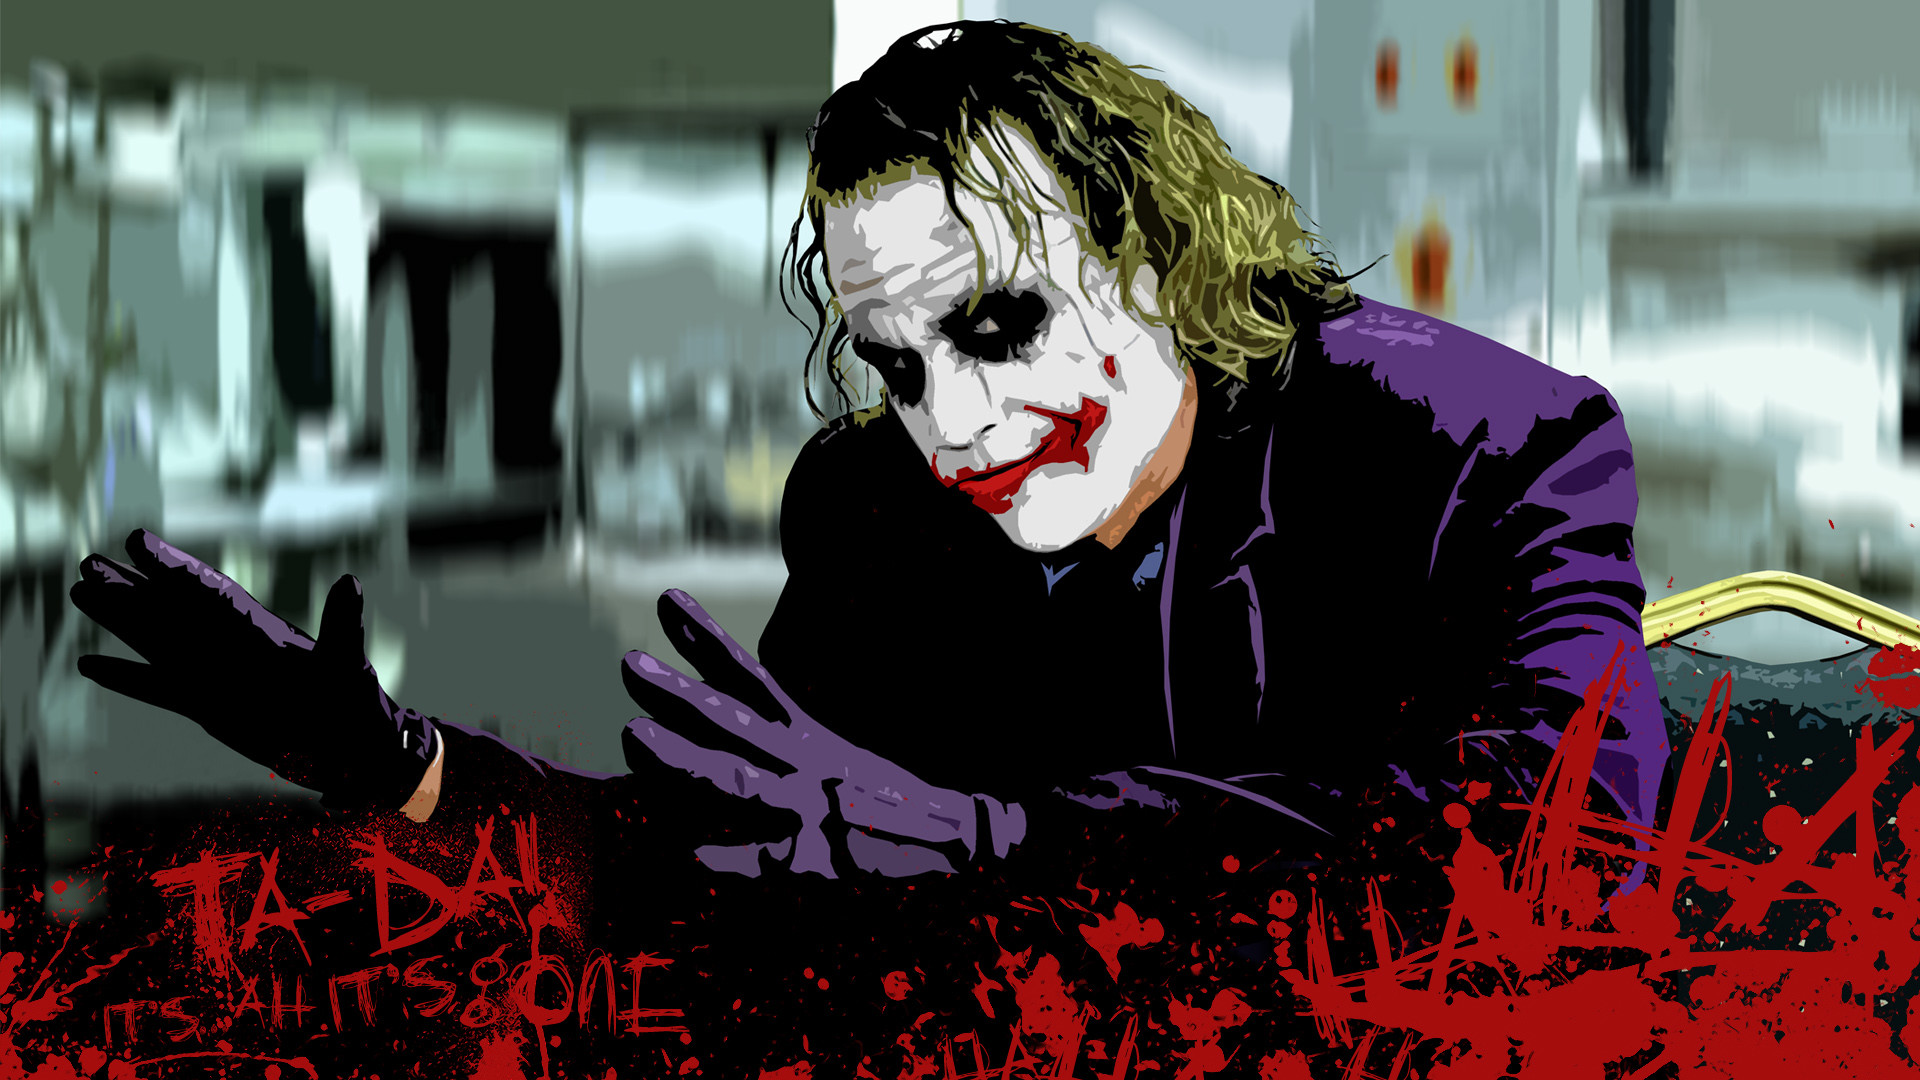 1920x1080 joker - The Joker Wallpaper (28092765) - Fanpop